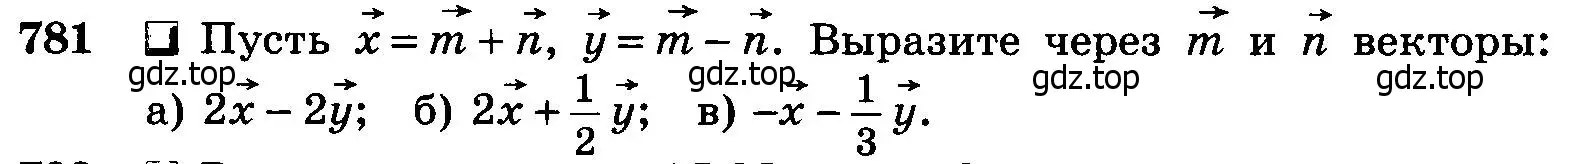 Условие номер 781 (страница 206) гдз по геометрии 7-9 класс Атанасян, Бутузов, учебник